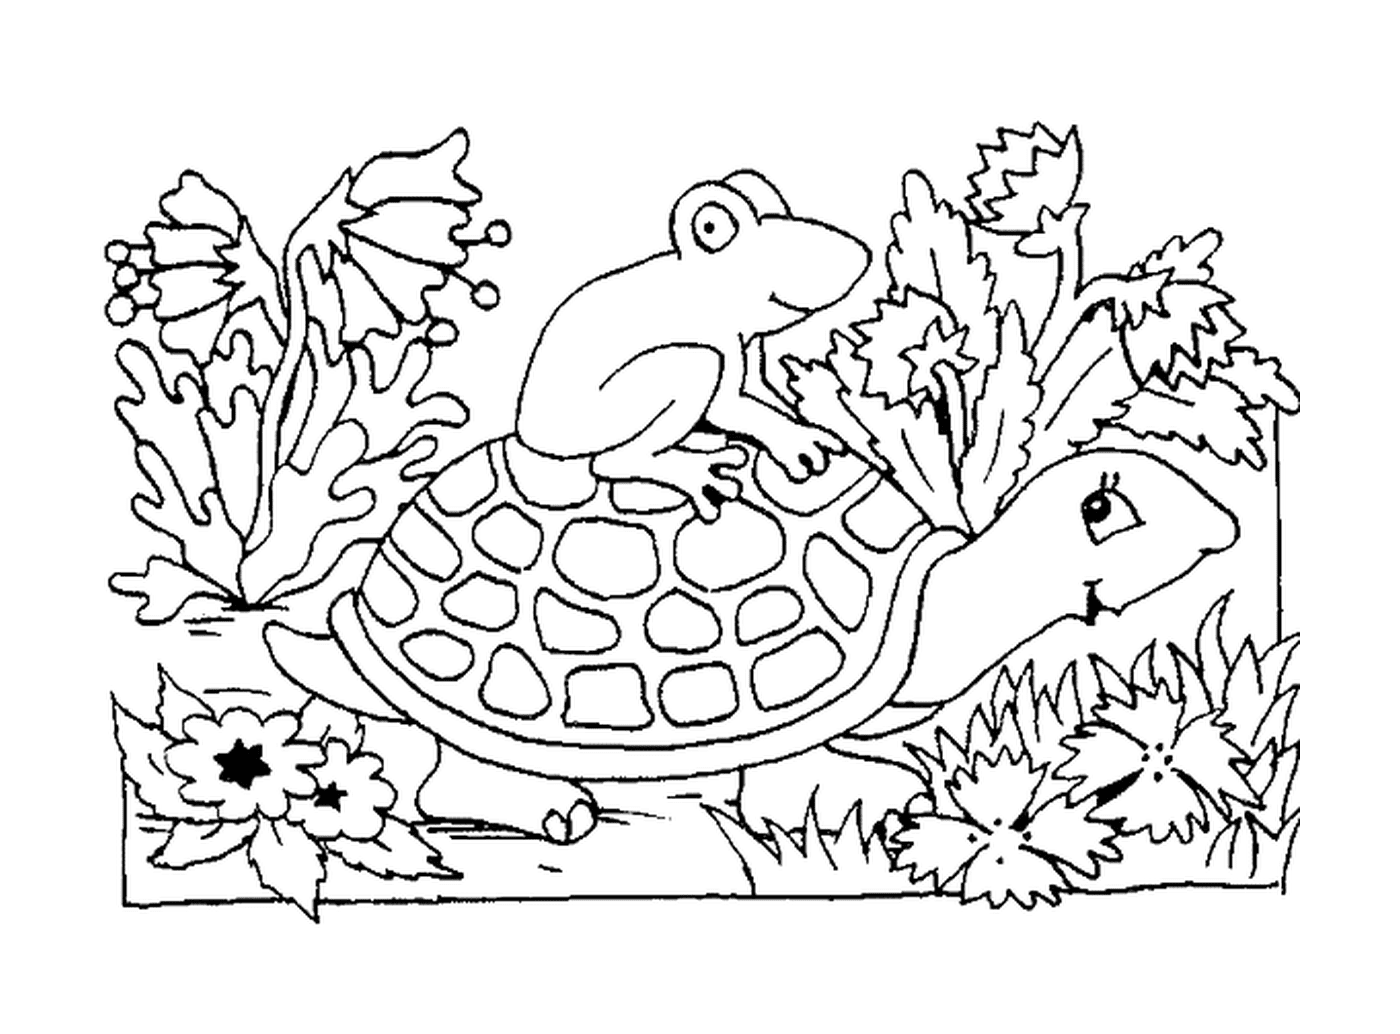  Una rana seduta su un guscio di tartaruga 